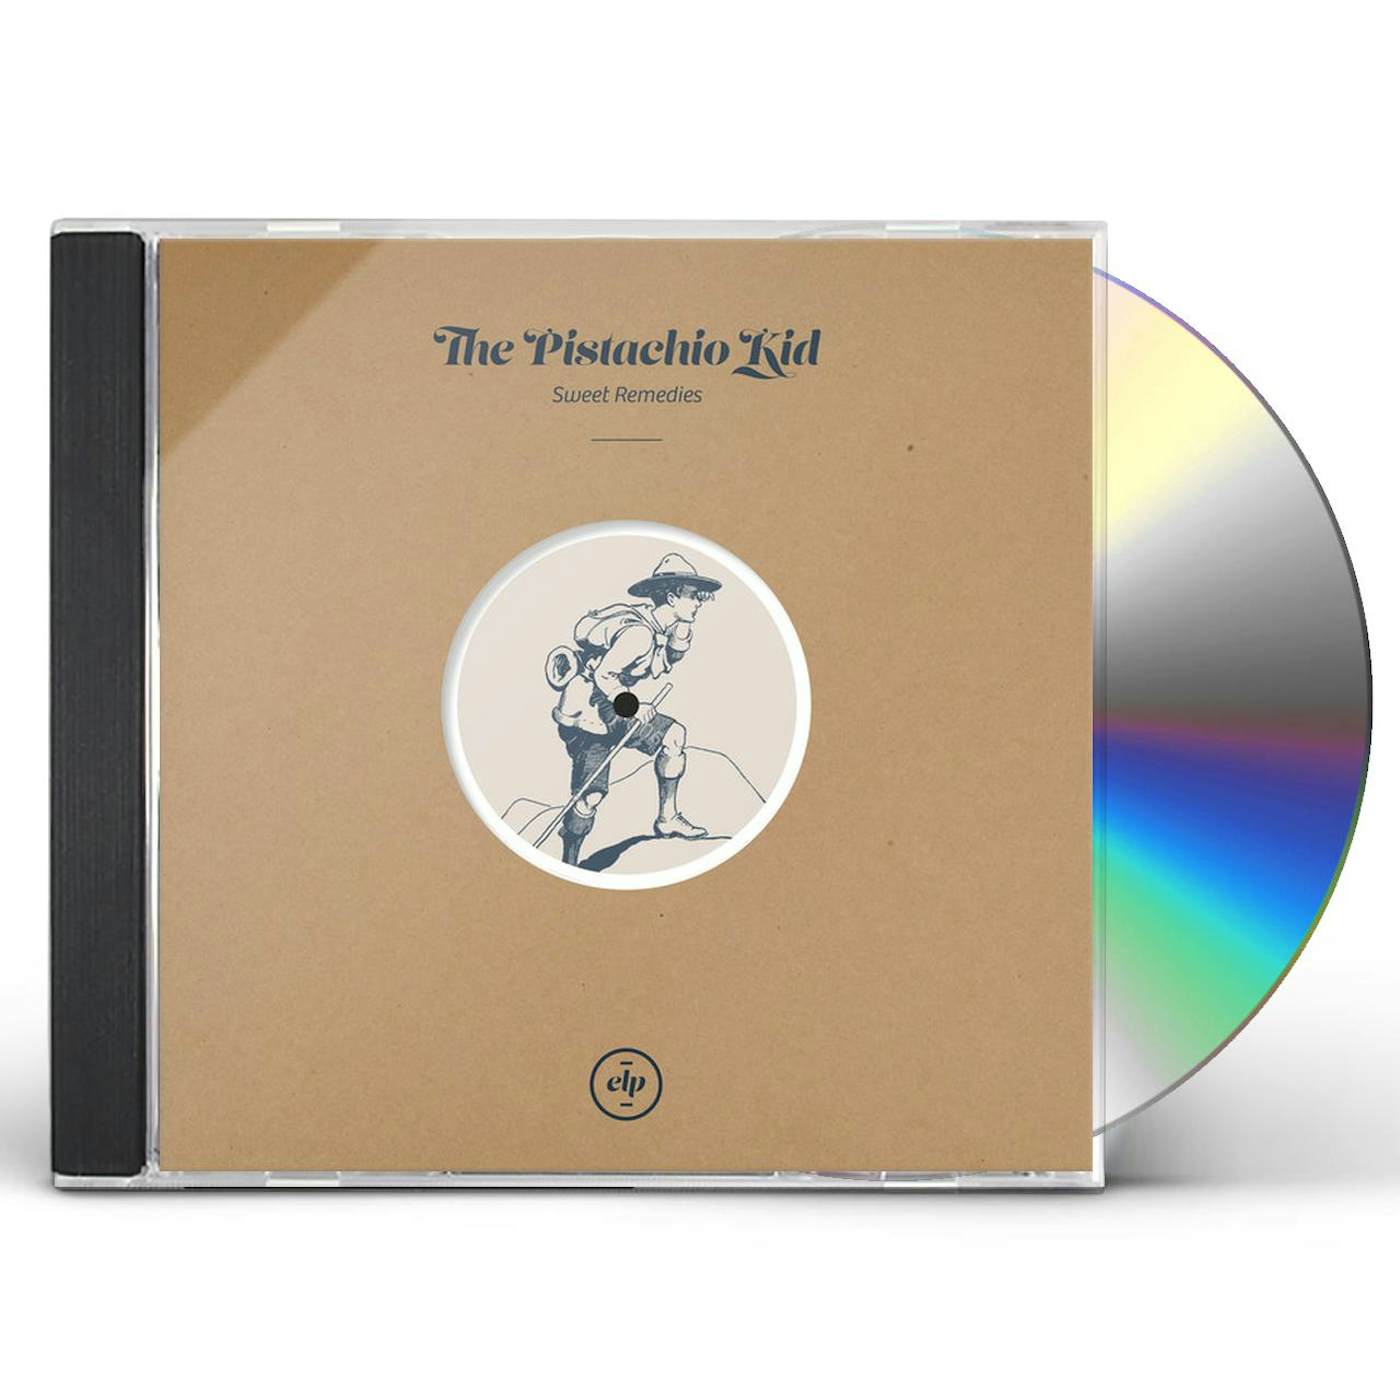 The Pistachio Kid SWEET REMEDIES CD